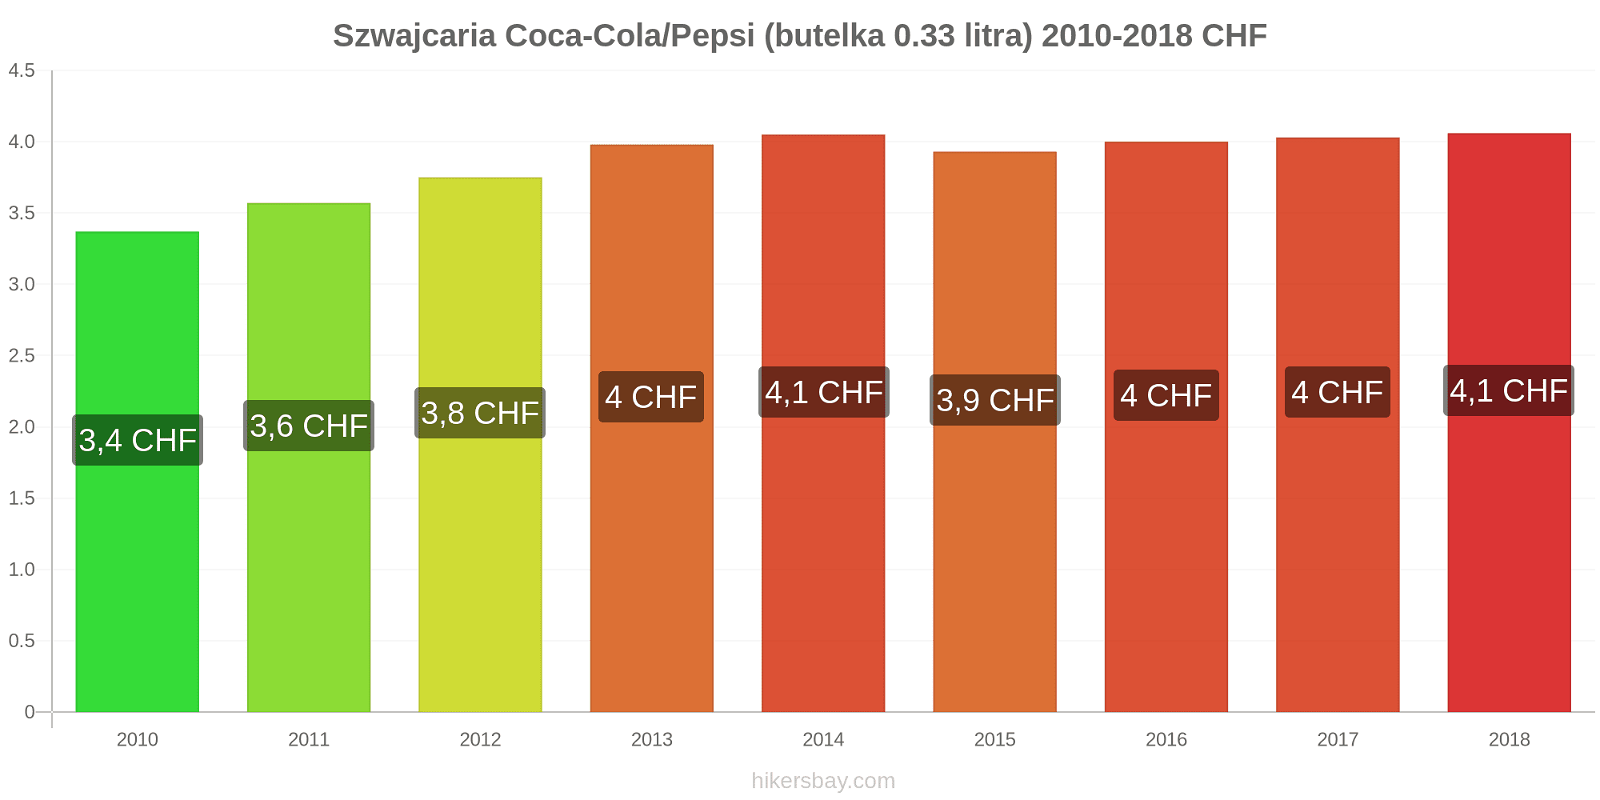 Szwajcaria zmiany cen Coca-Cola/Pepsi (butelka 0.33 litra) hikersbay.com